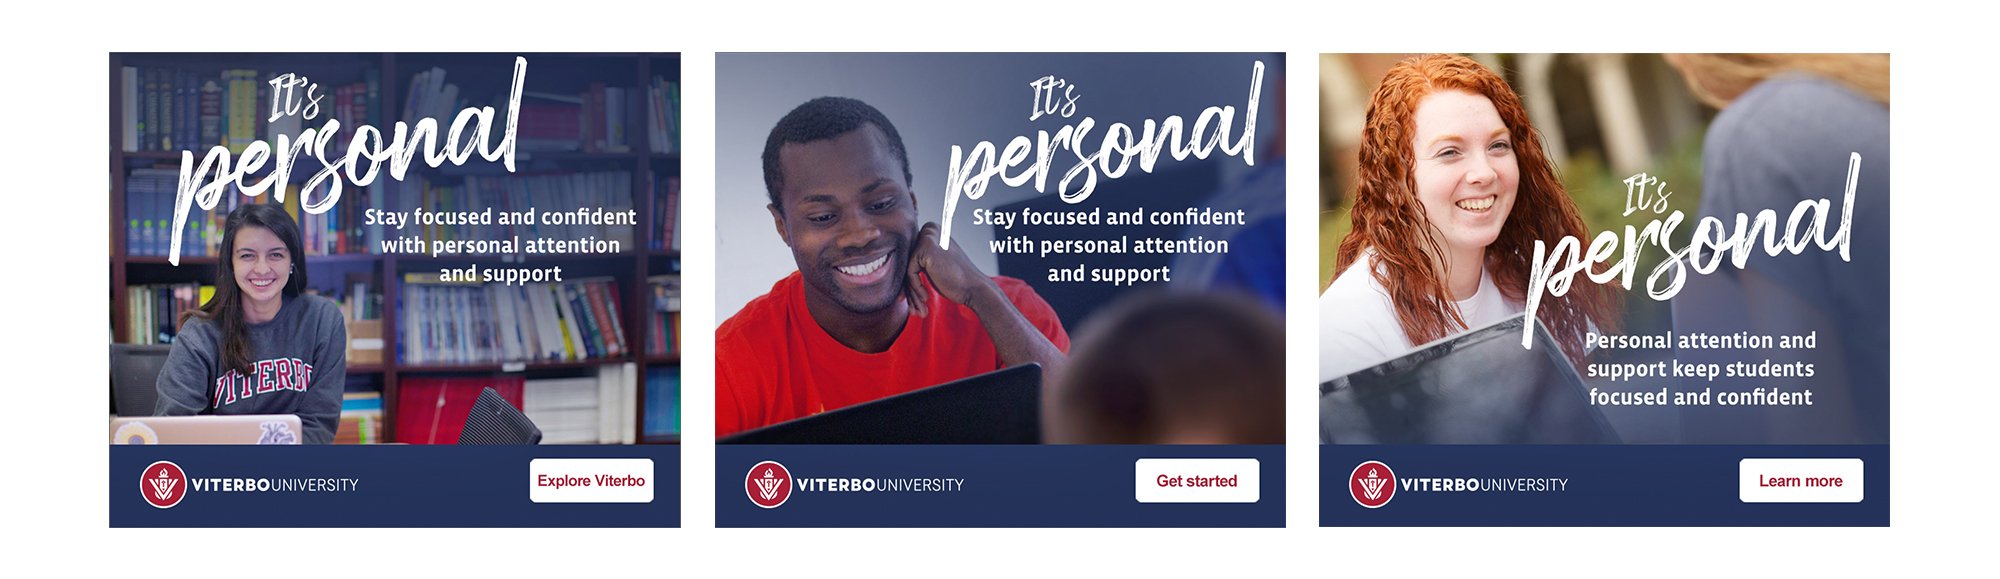 Viterbo University display ads